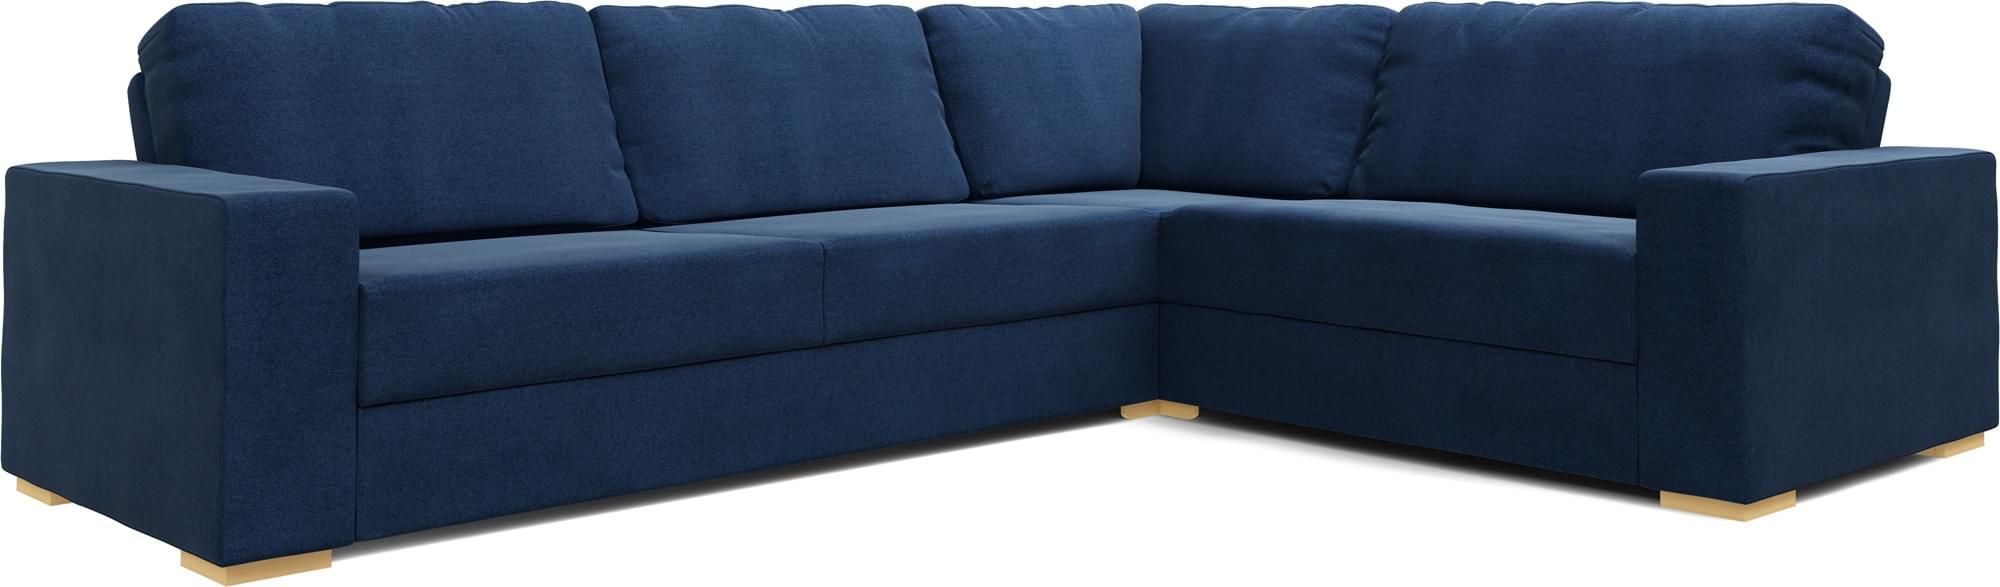 Kai 3X2 Corner Double Sofa Bed